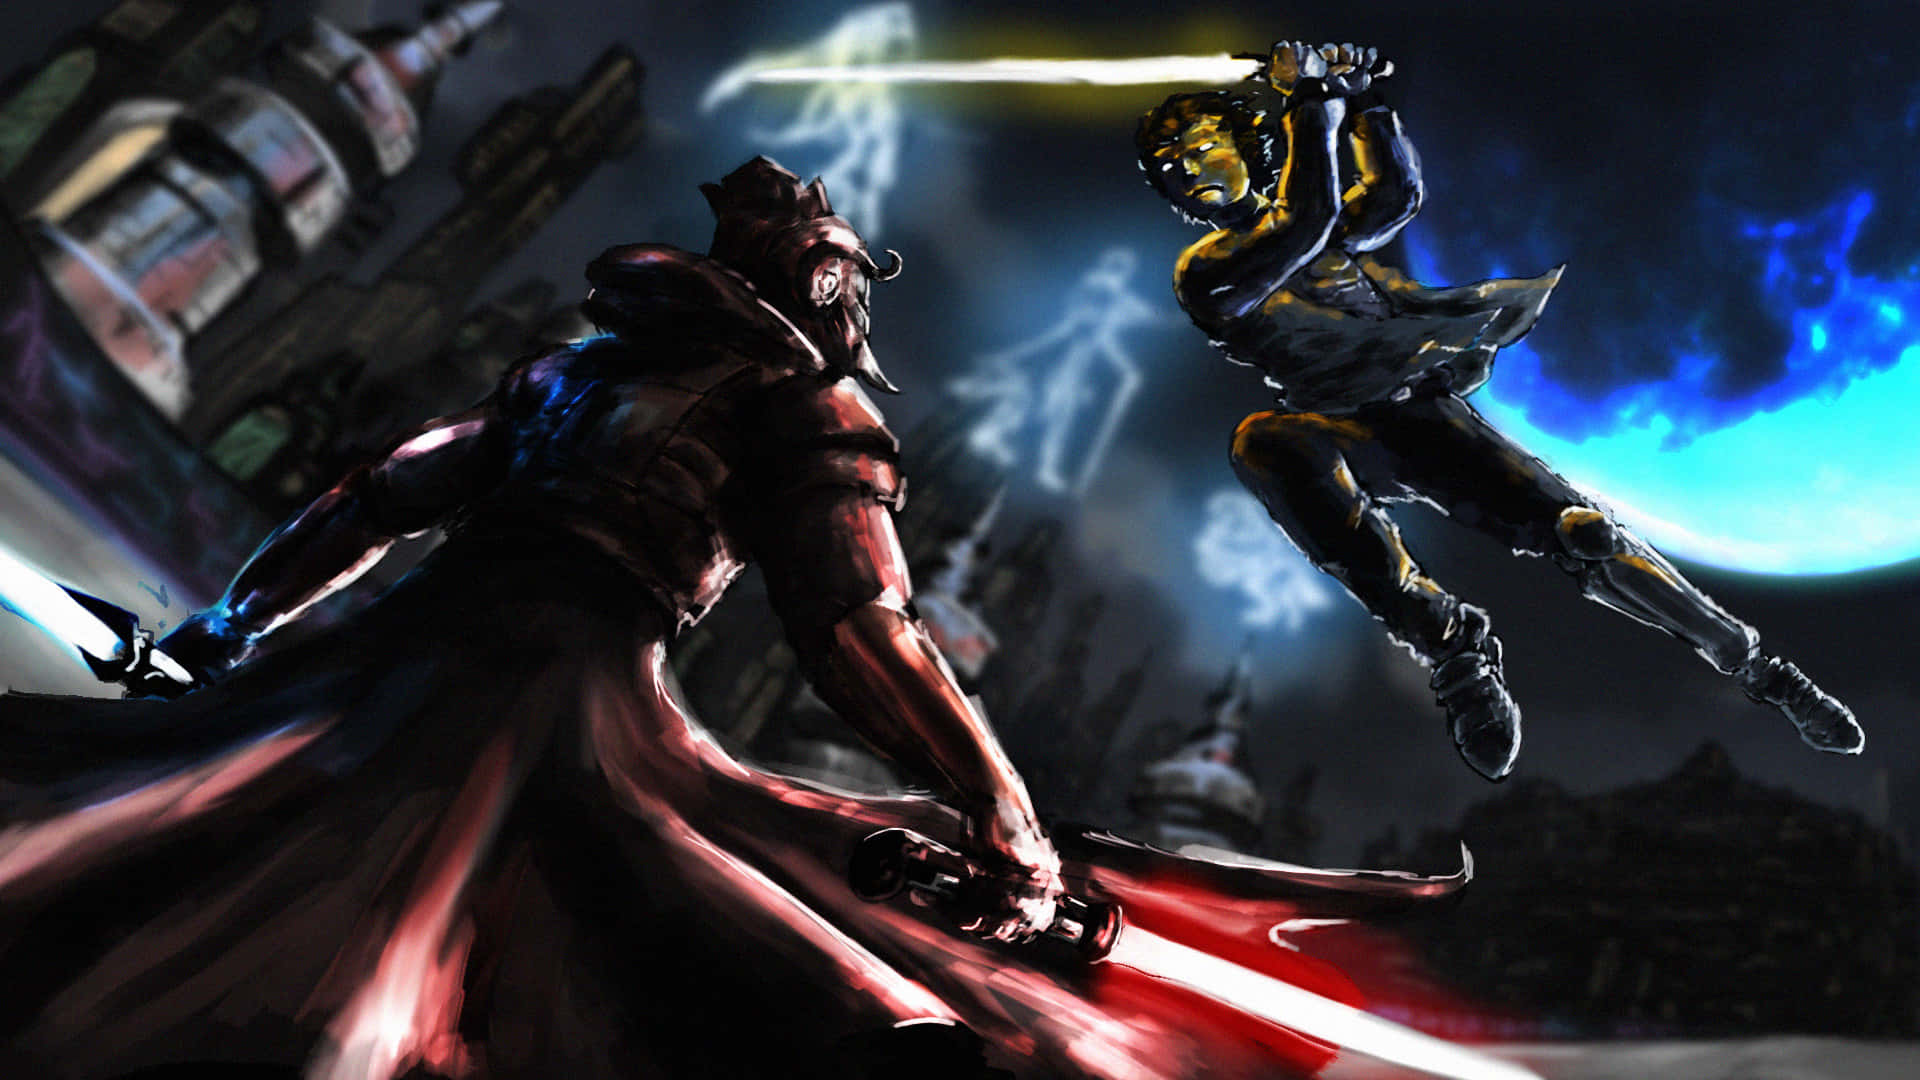 Epic Lightsaber Duel in Battle Wallpaper